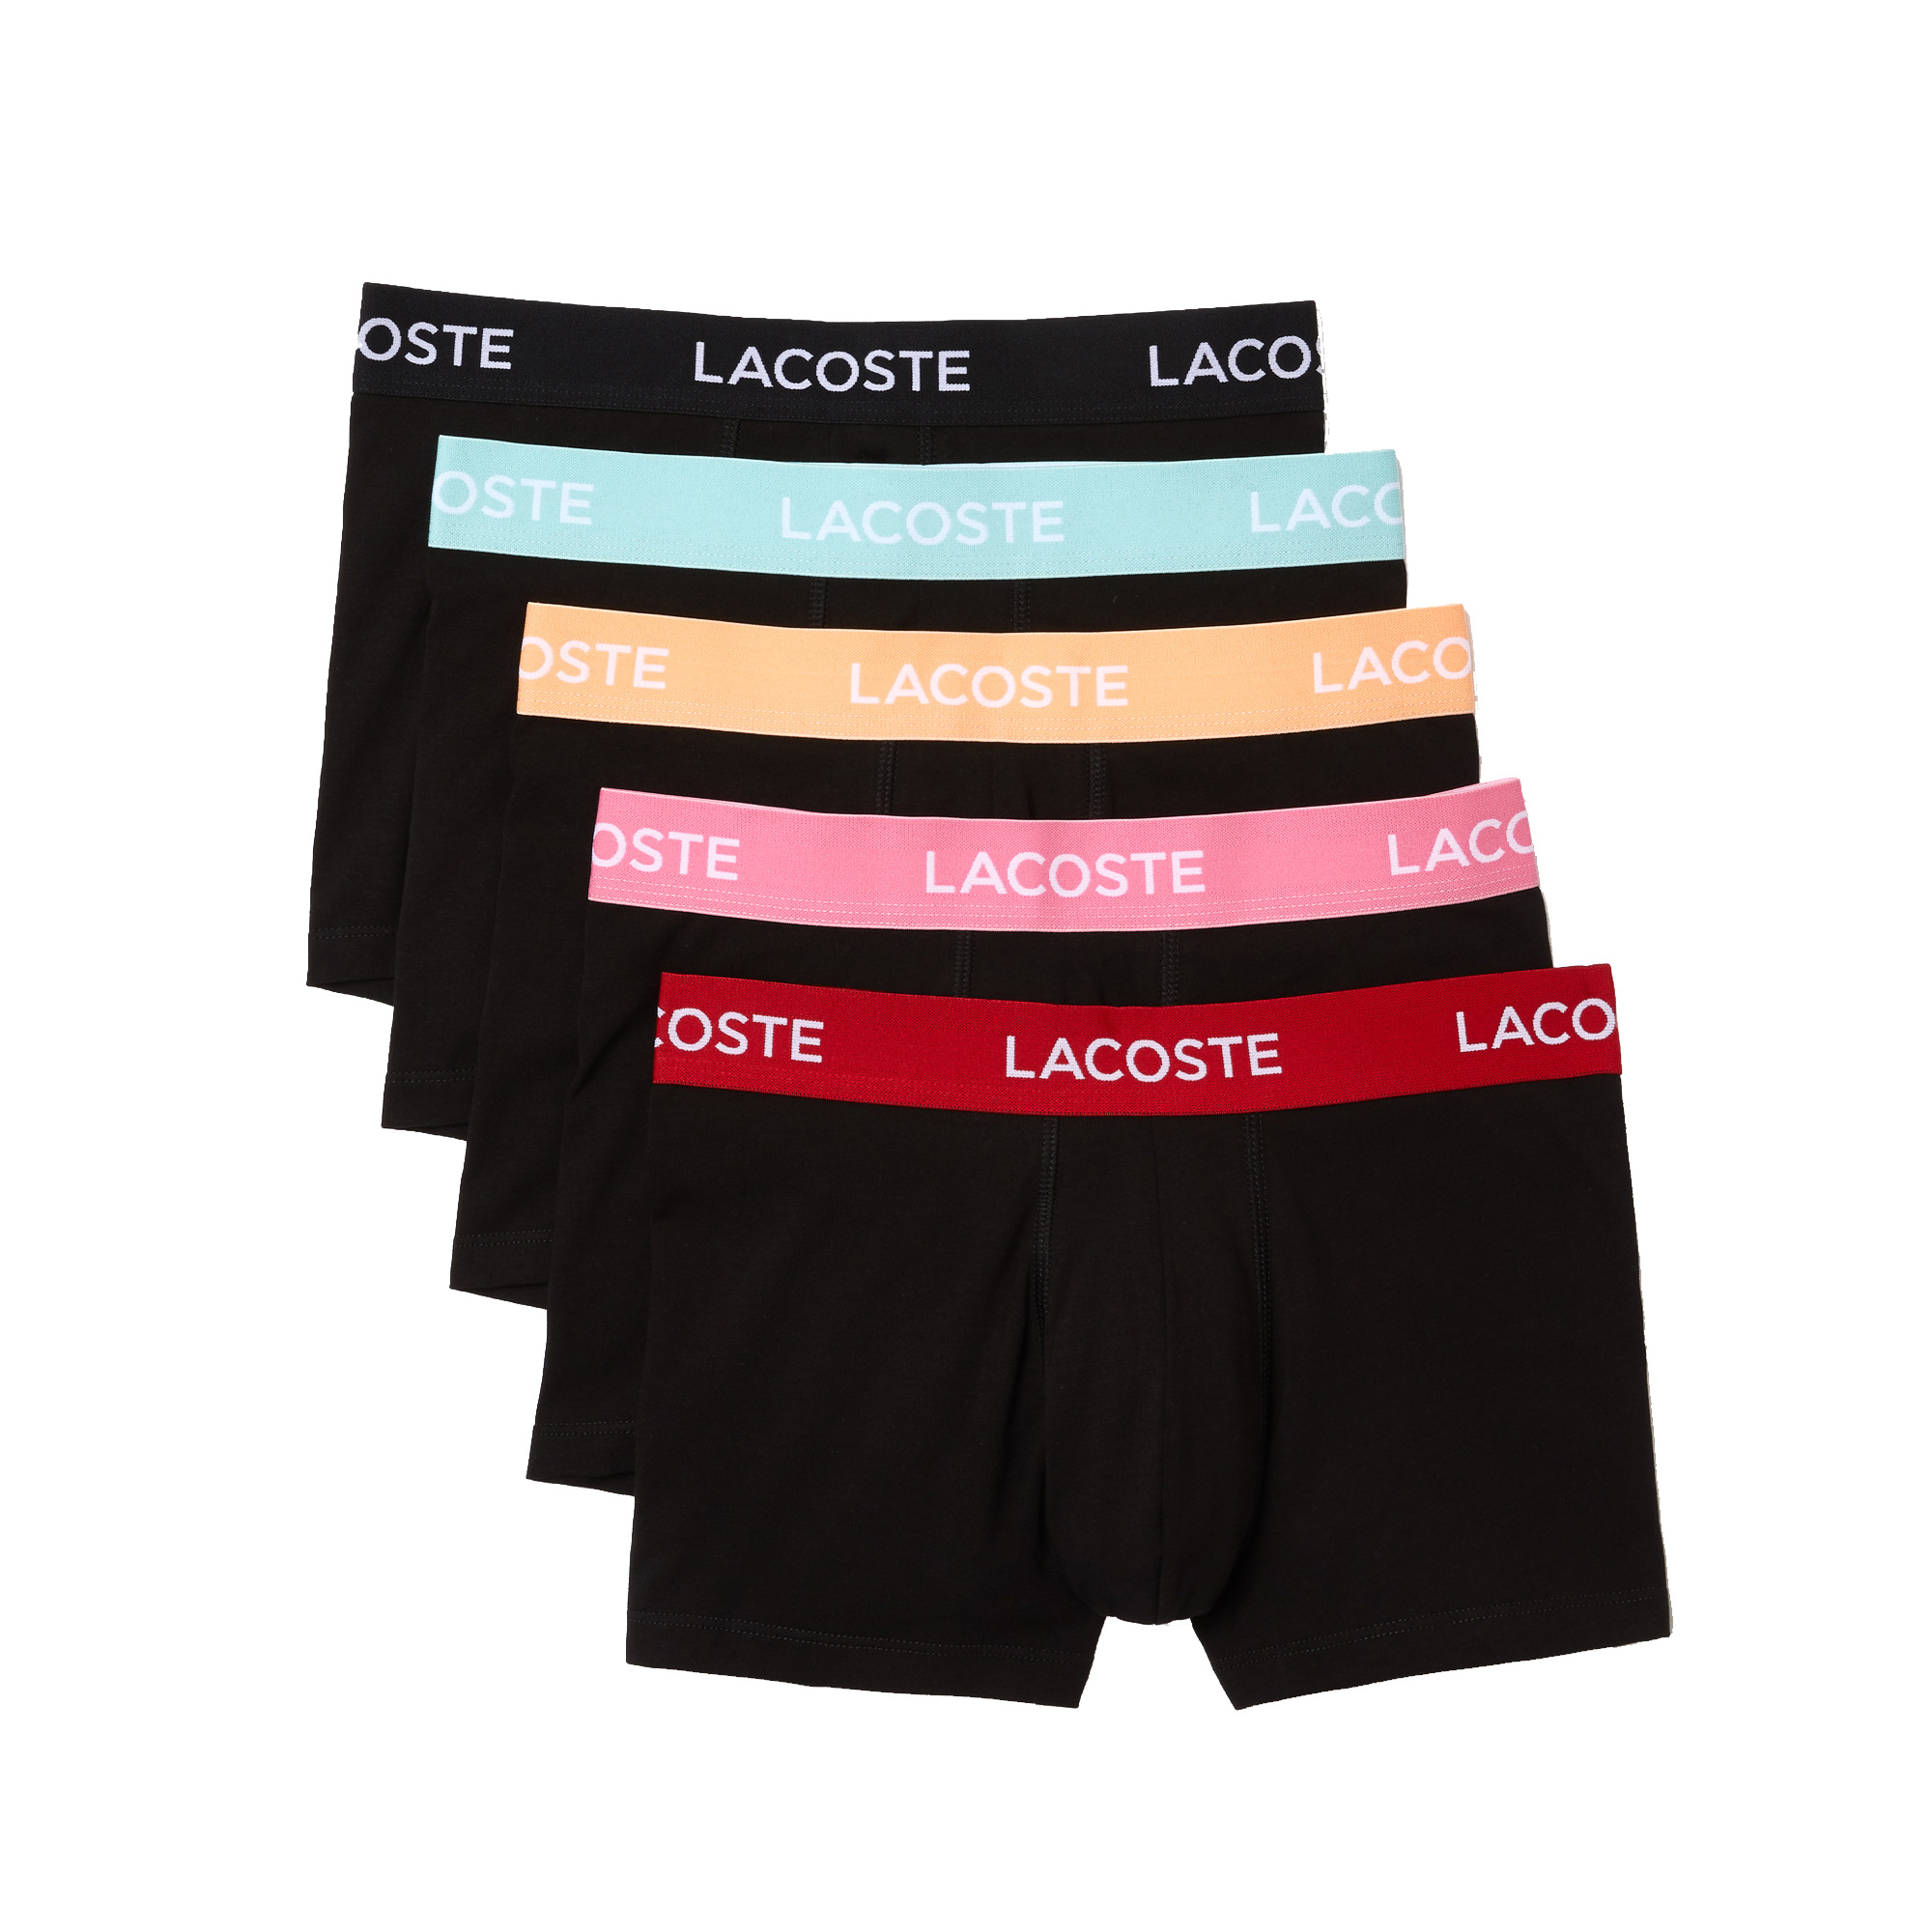 LACOSTE Men’s 5 Pack Casual Cotton Stretch Trunks/ Boxers Underwear Sz L  White